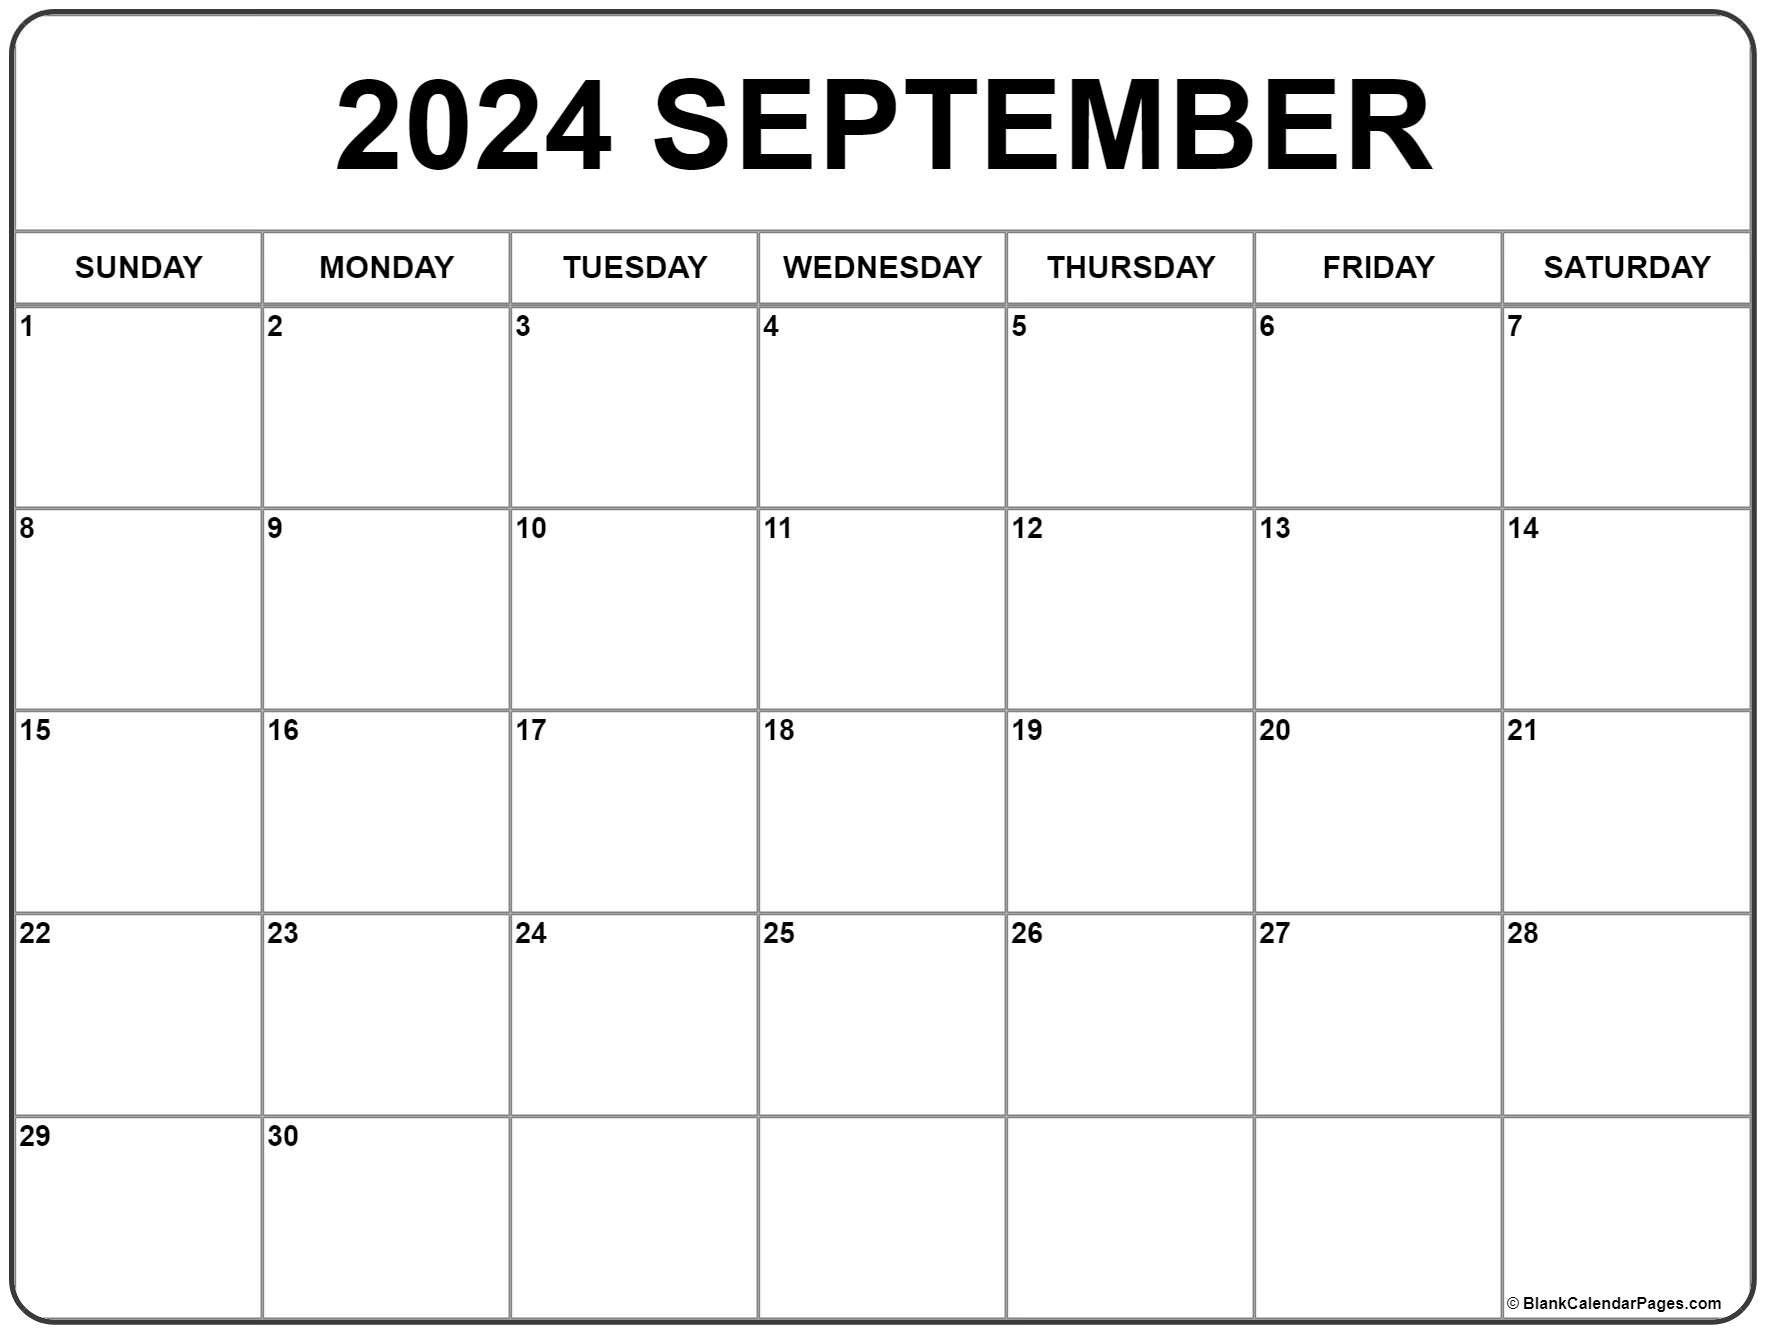 September 2021 Printable Calendar September 2021 calendar | free printable monthly calendars